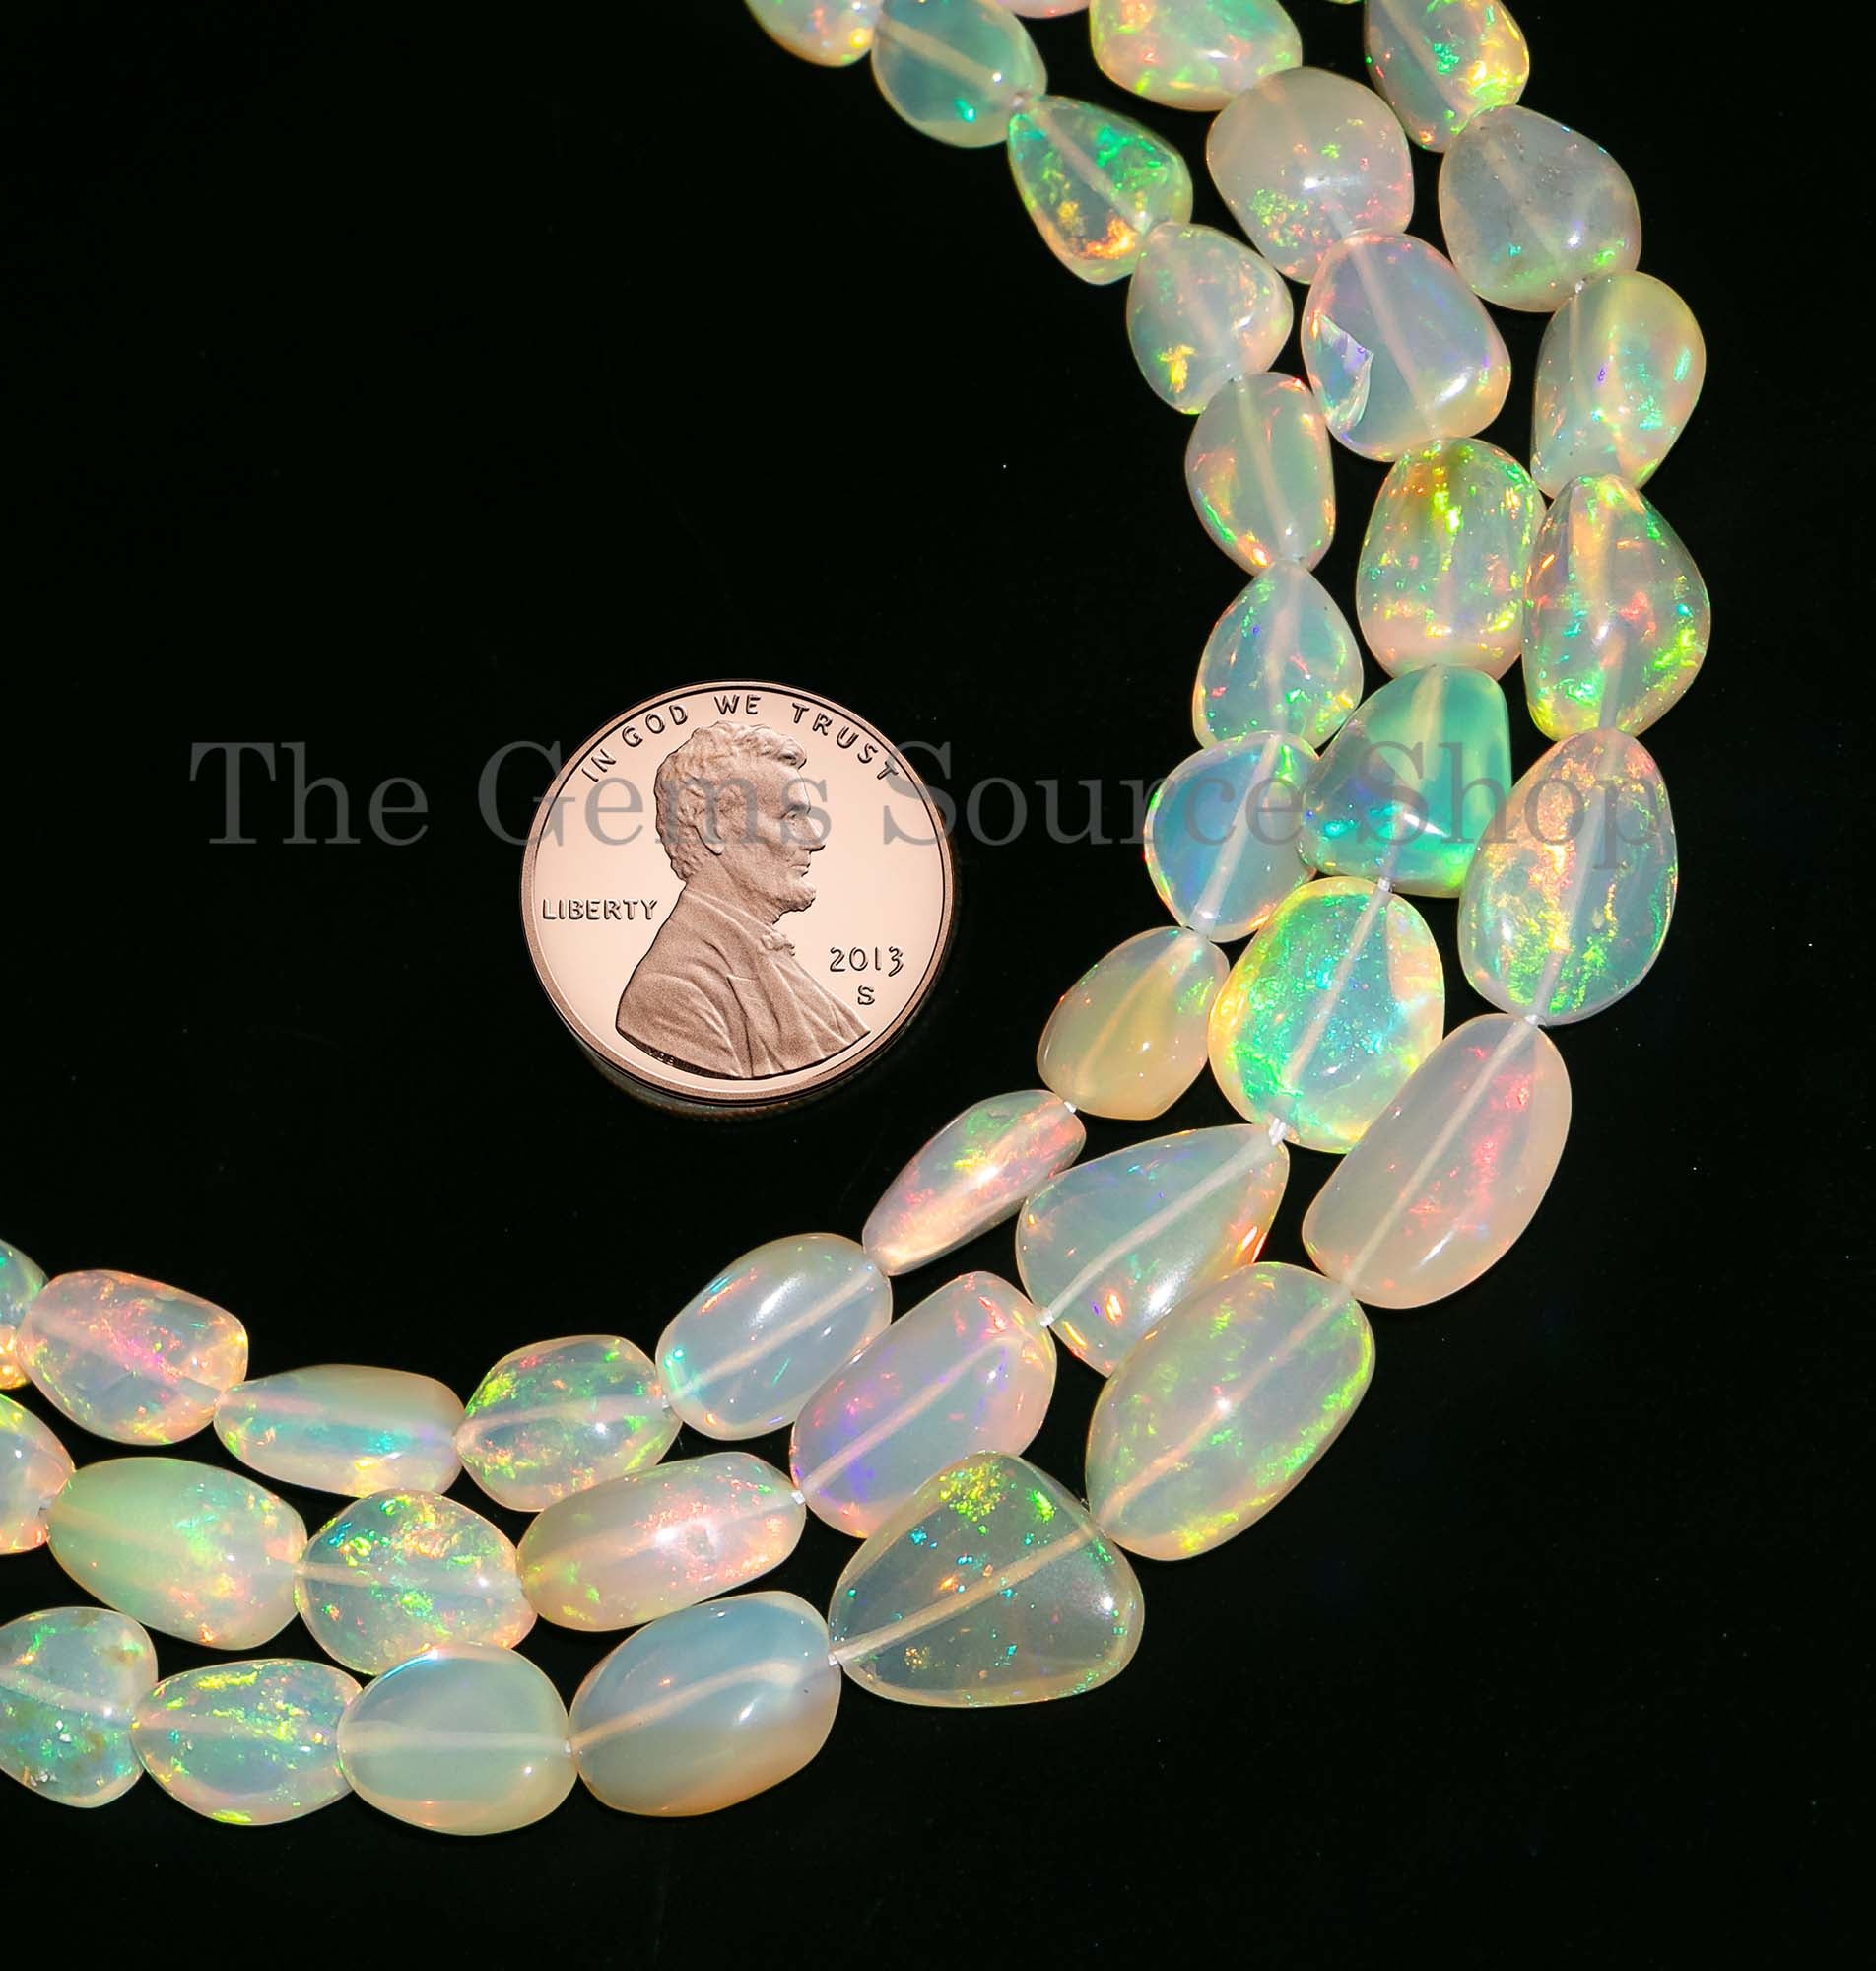 Top Quality Ethiopian Opal Plain Nuggets Beads, Ethiopian Opal Beads, Smooth Nugget Beads